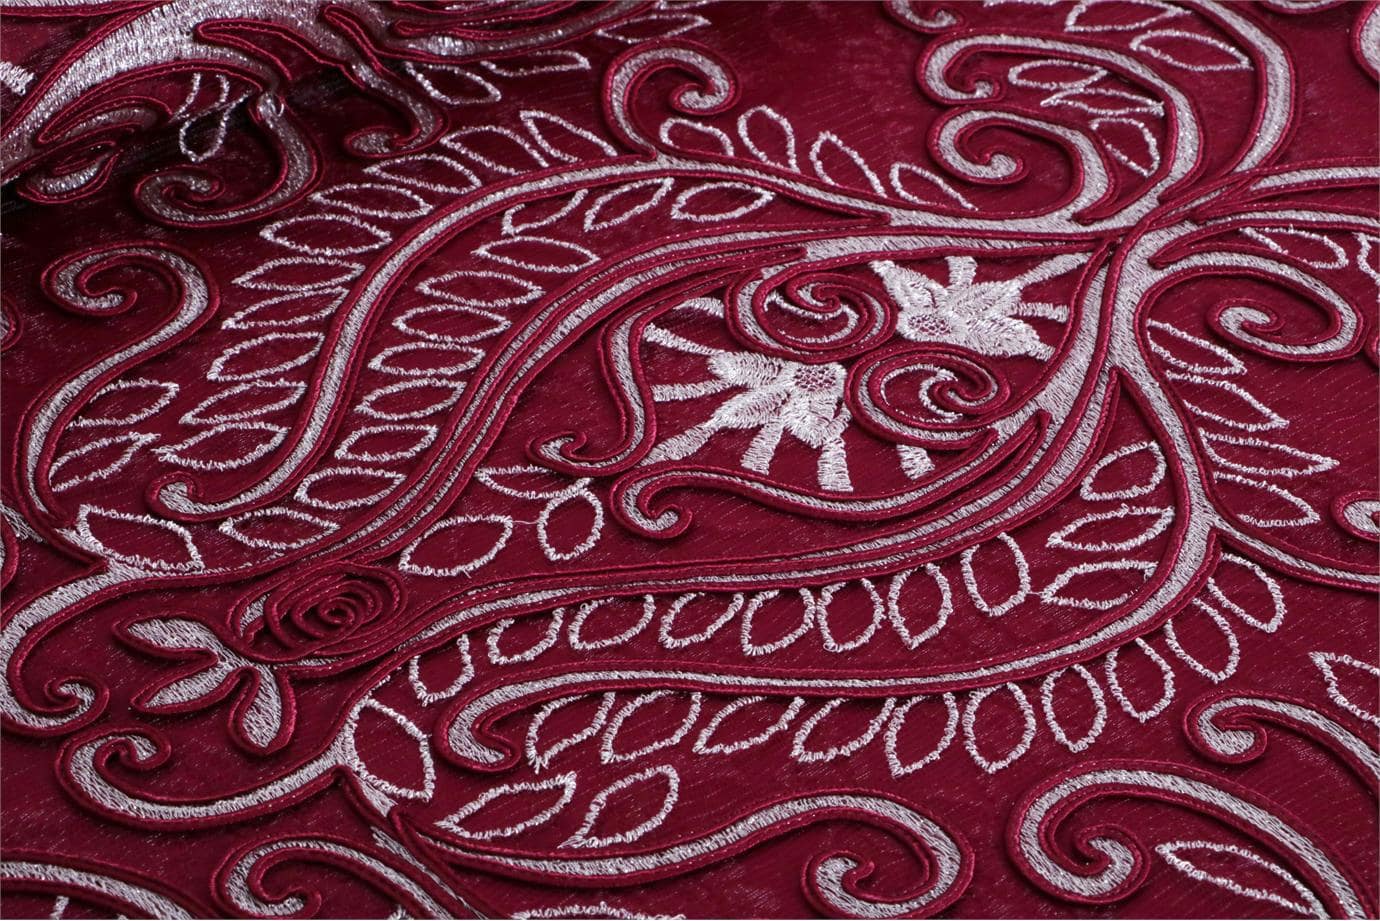 Tessuti volute arabeschi damaschi per abbigliamento, sartoria e moda